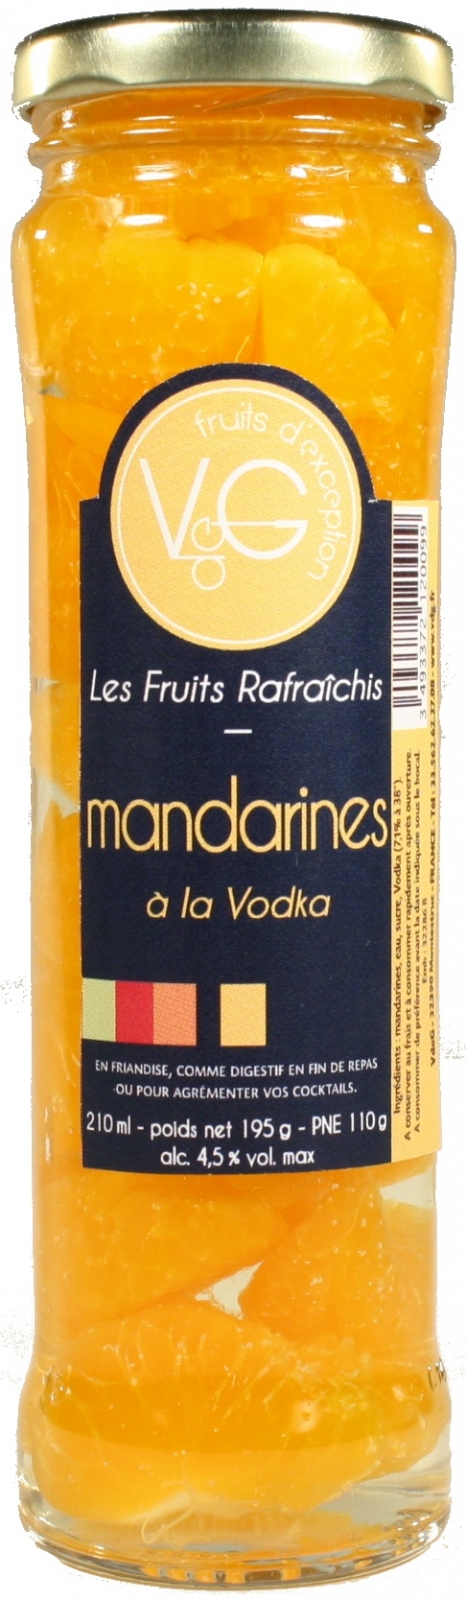 mandarine Vodka Verger de Gascogne